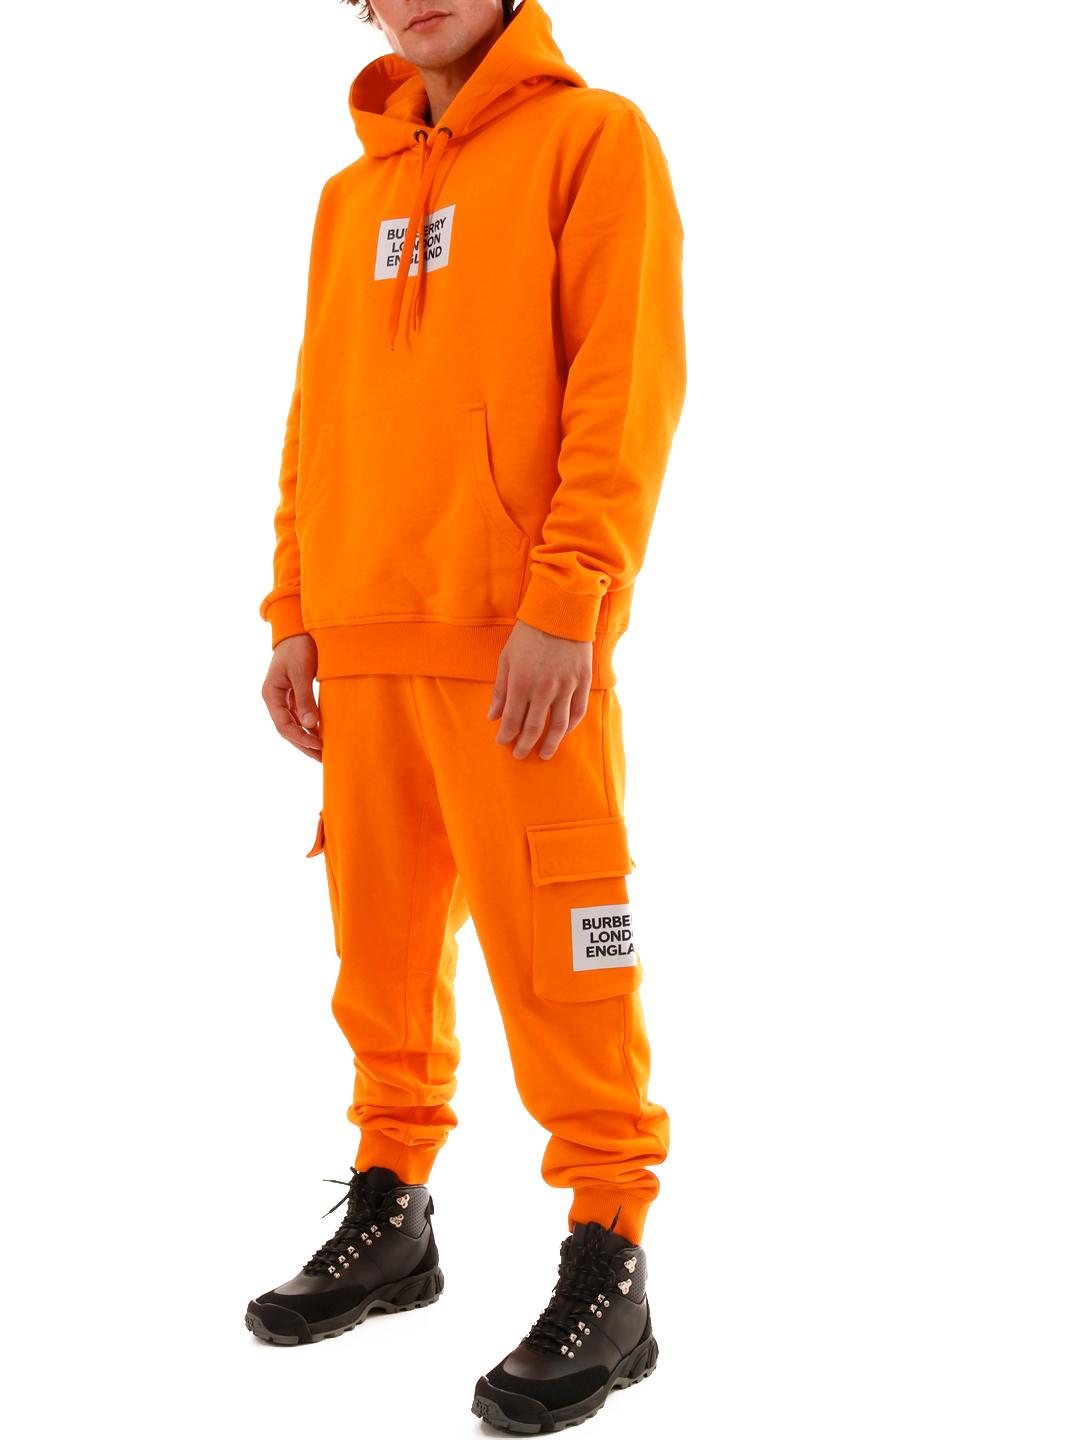 Burberry Cotton Jogging Trousers Orange for Men - Lyst